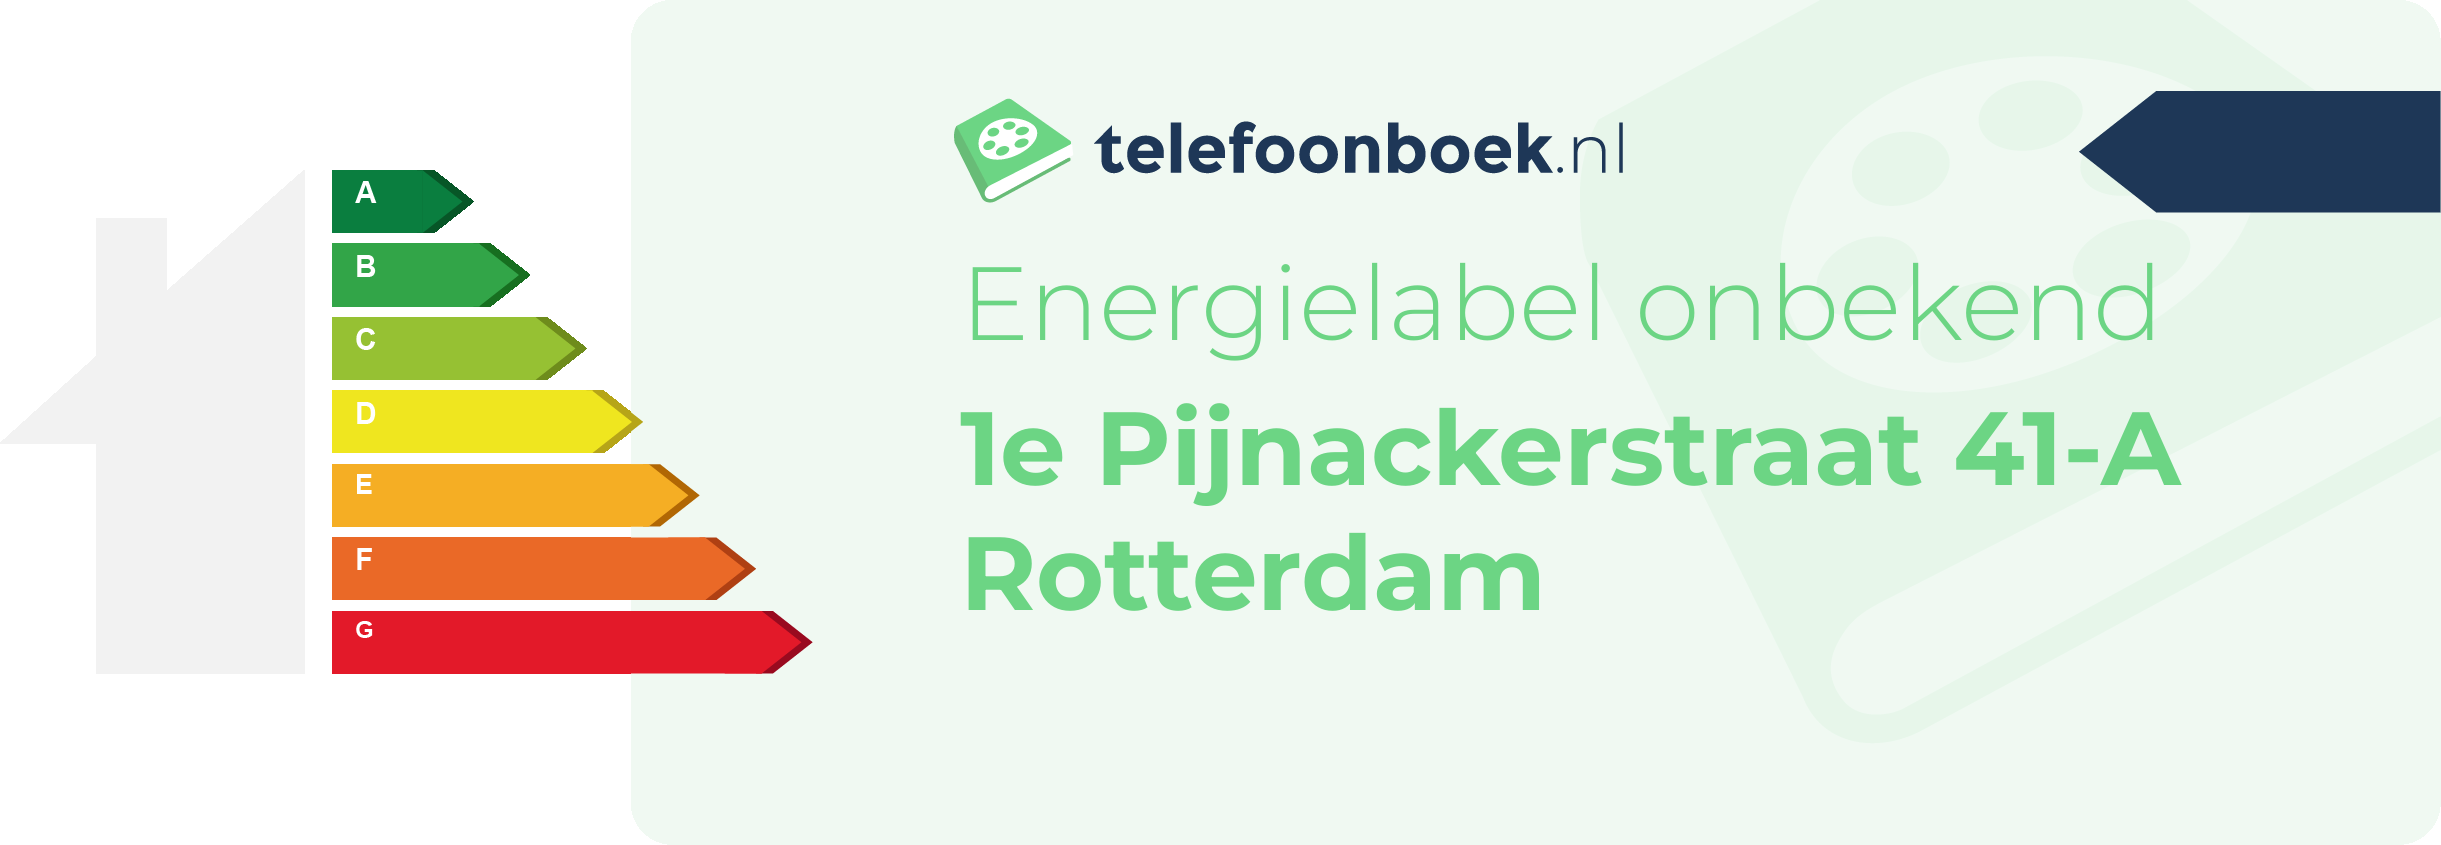 Energielabel 1e Pijnackerstraat 41-A Rotterdam